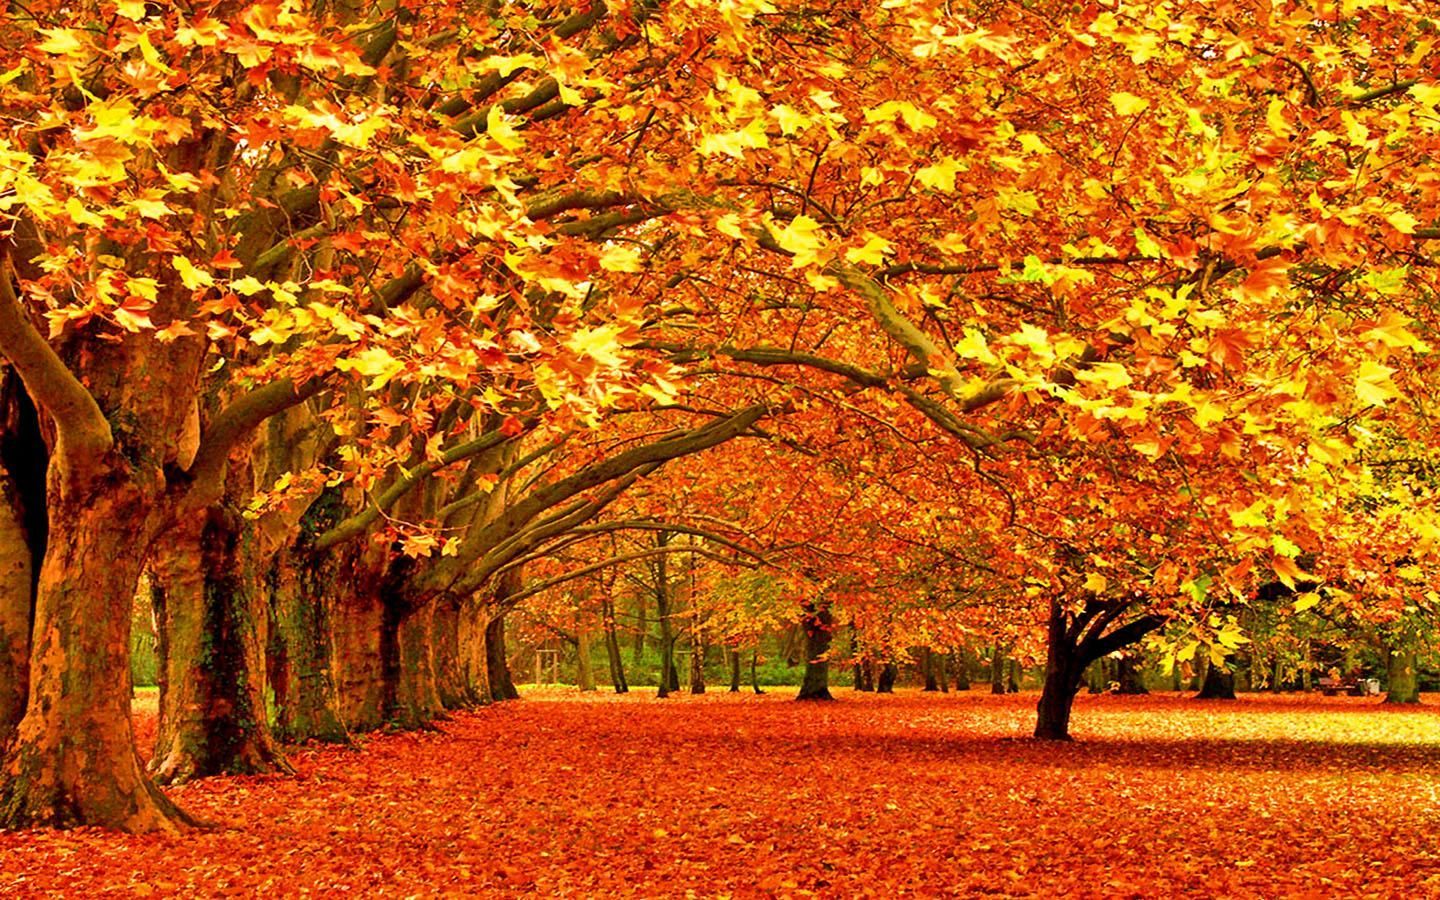 Golden Autumn Woodland. Autumn scenery, Autumn scenes, Autumn nature